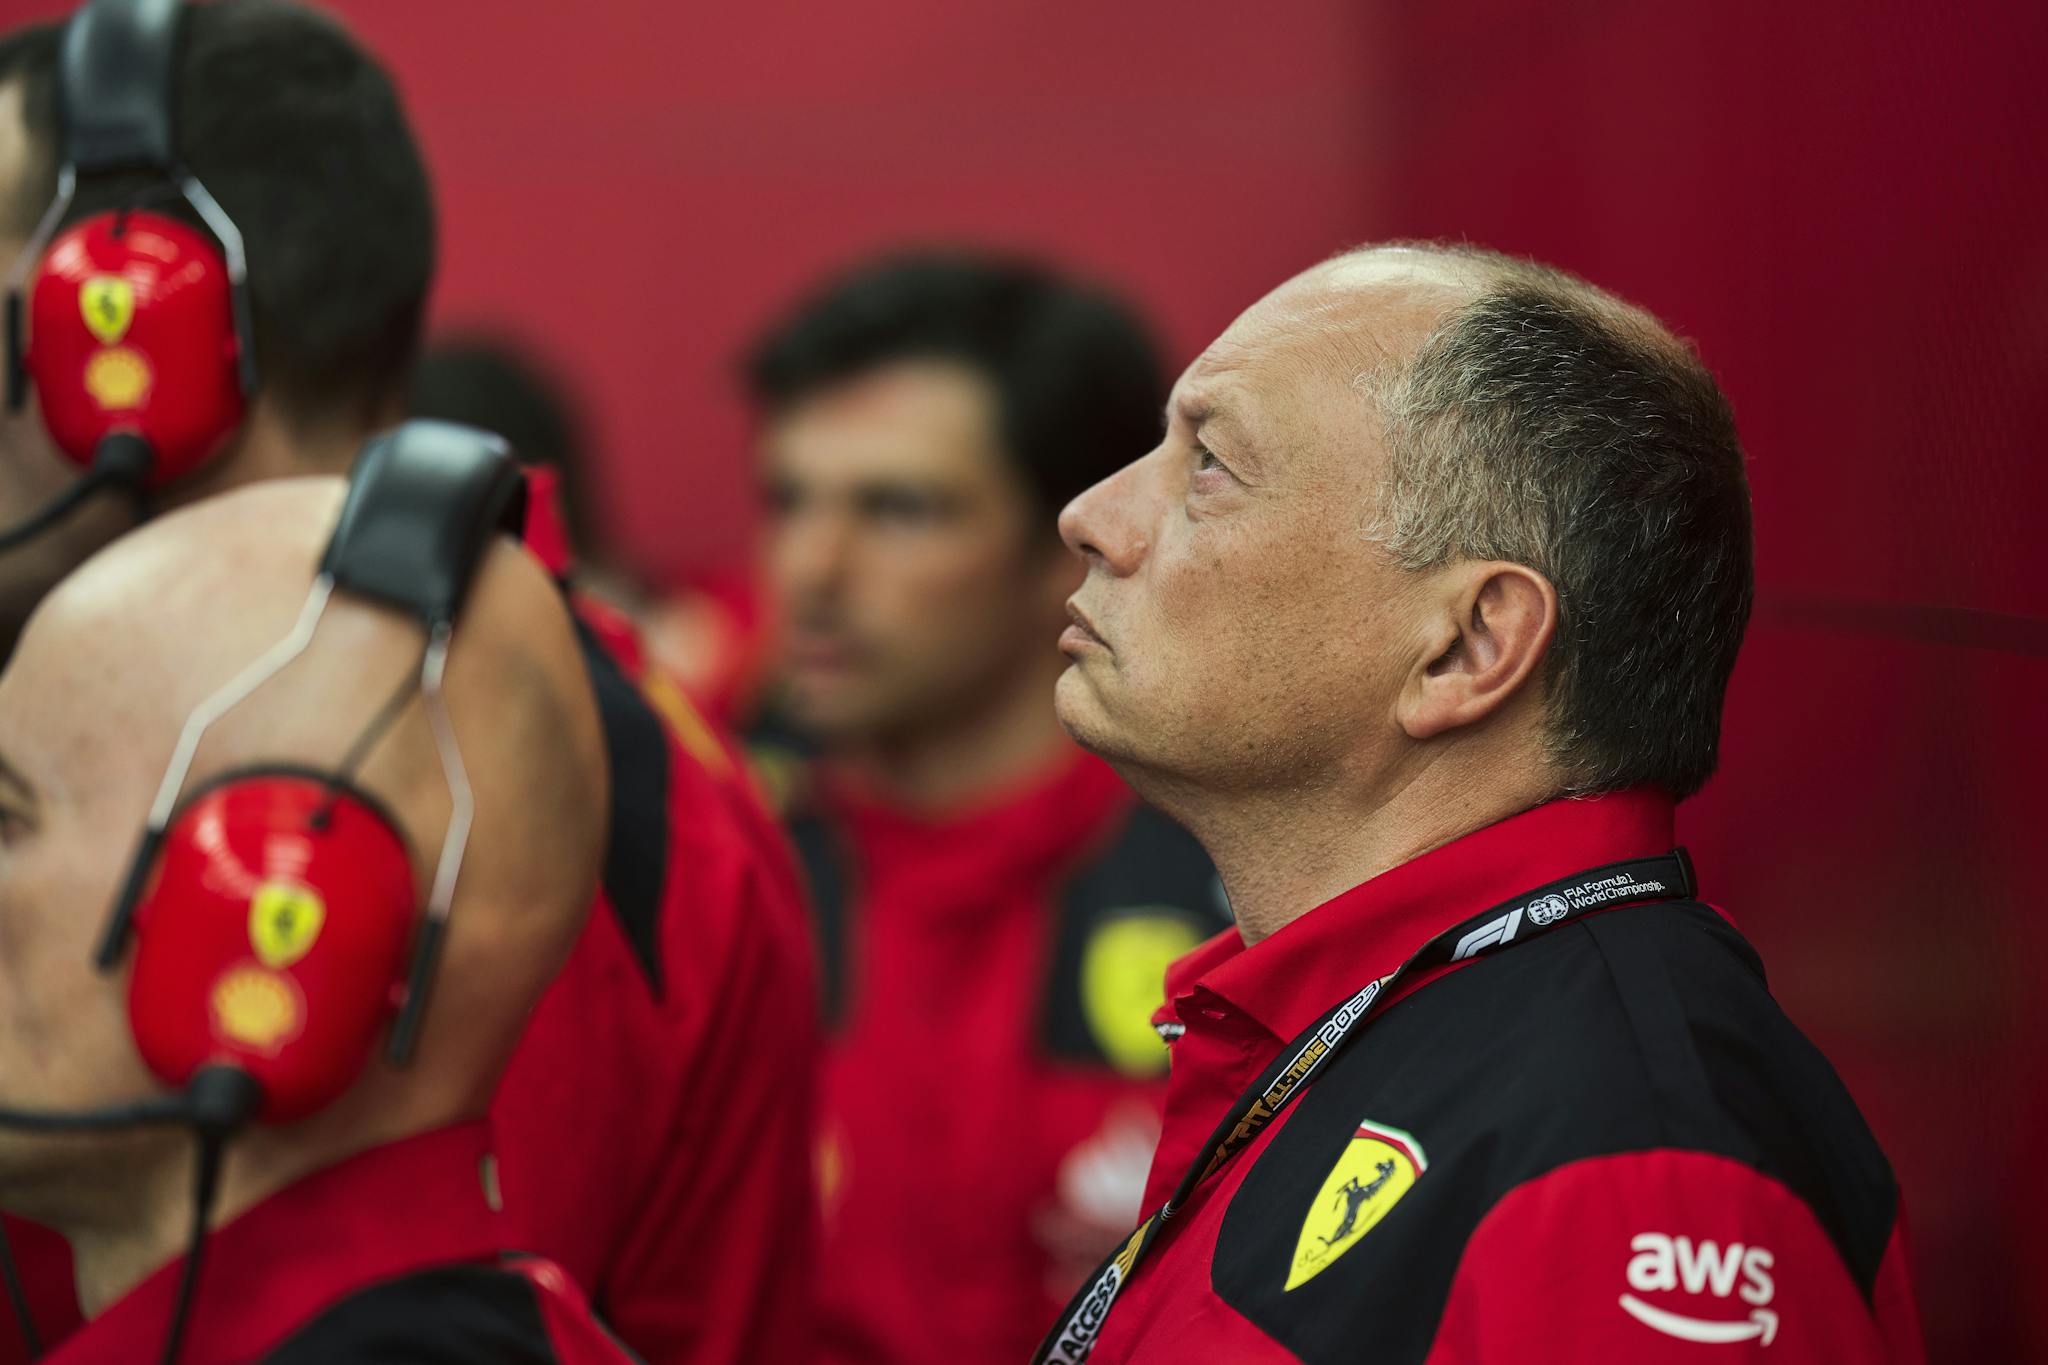 Vasseur skomentował ostatnie gorące tematy wokół Ferrari